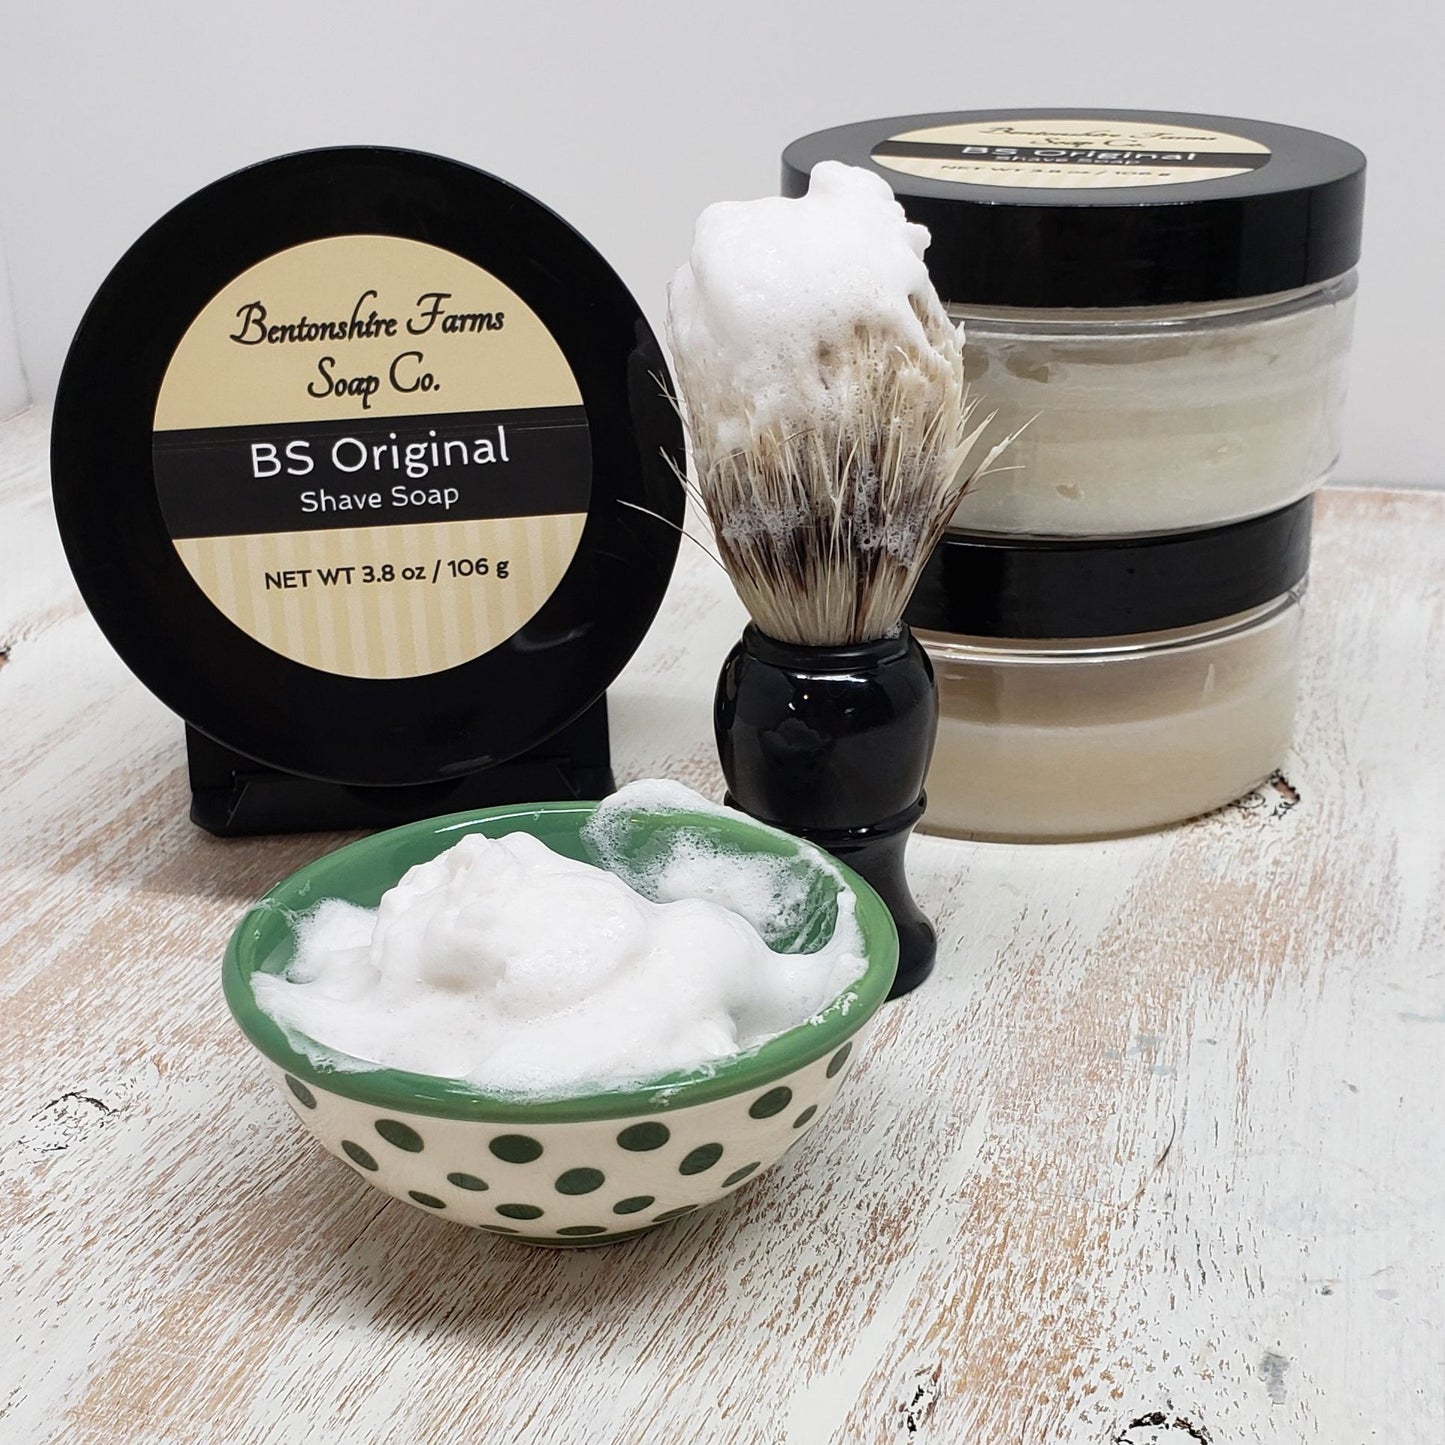 BS Original Shave Soap